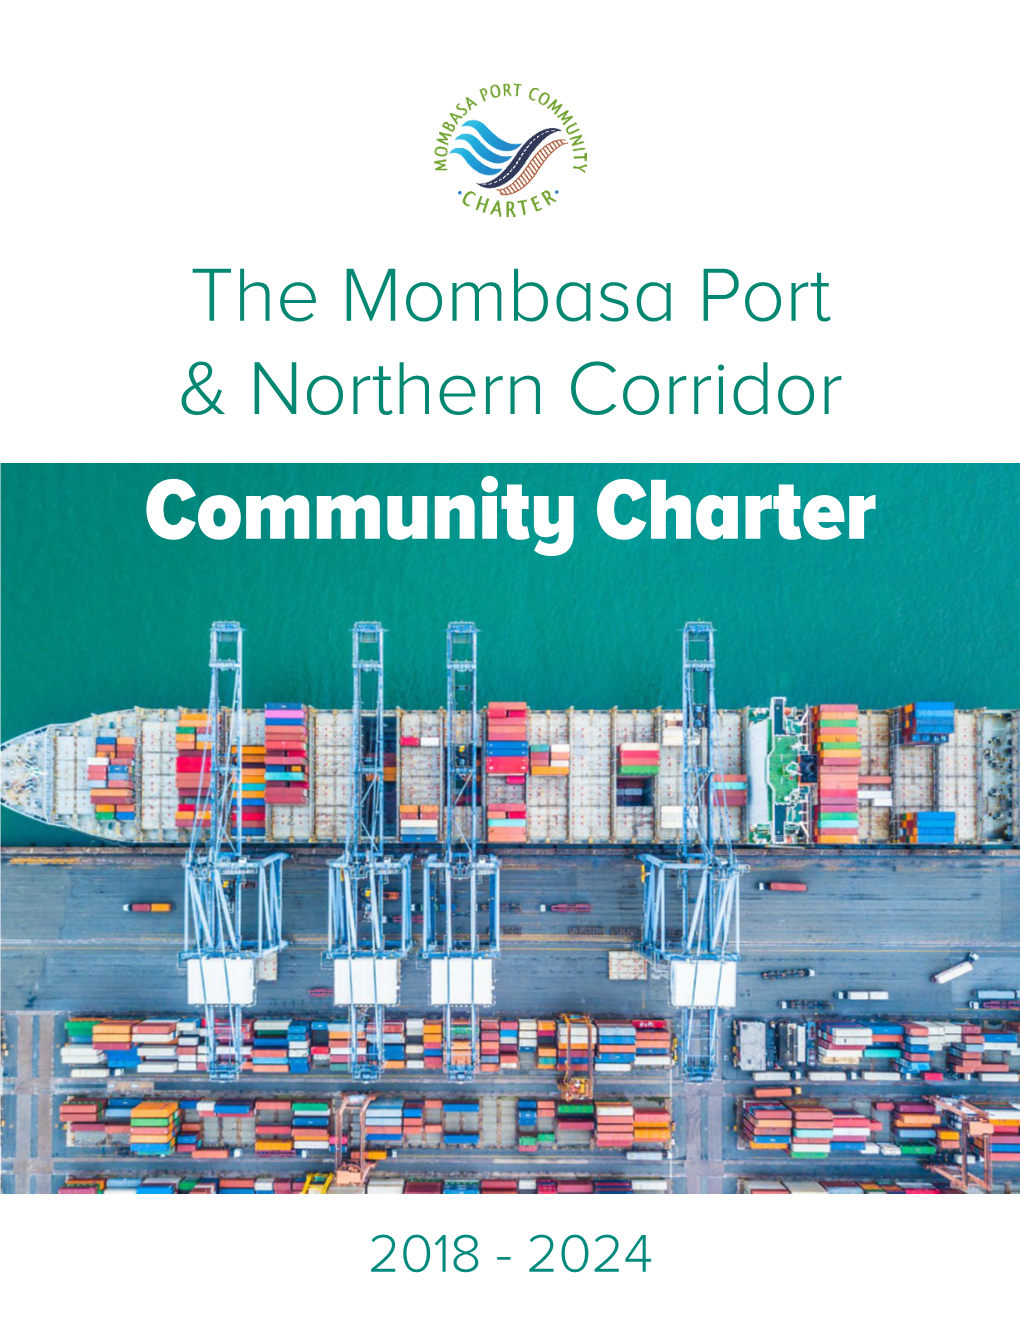 Mombasa Port & Northern Corridor Community Charter 2018-2024